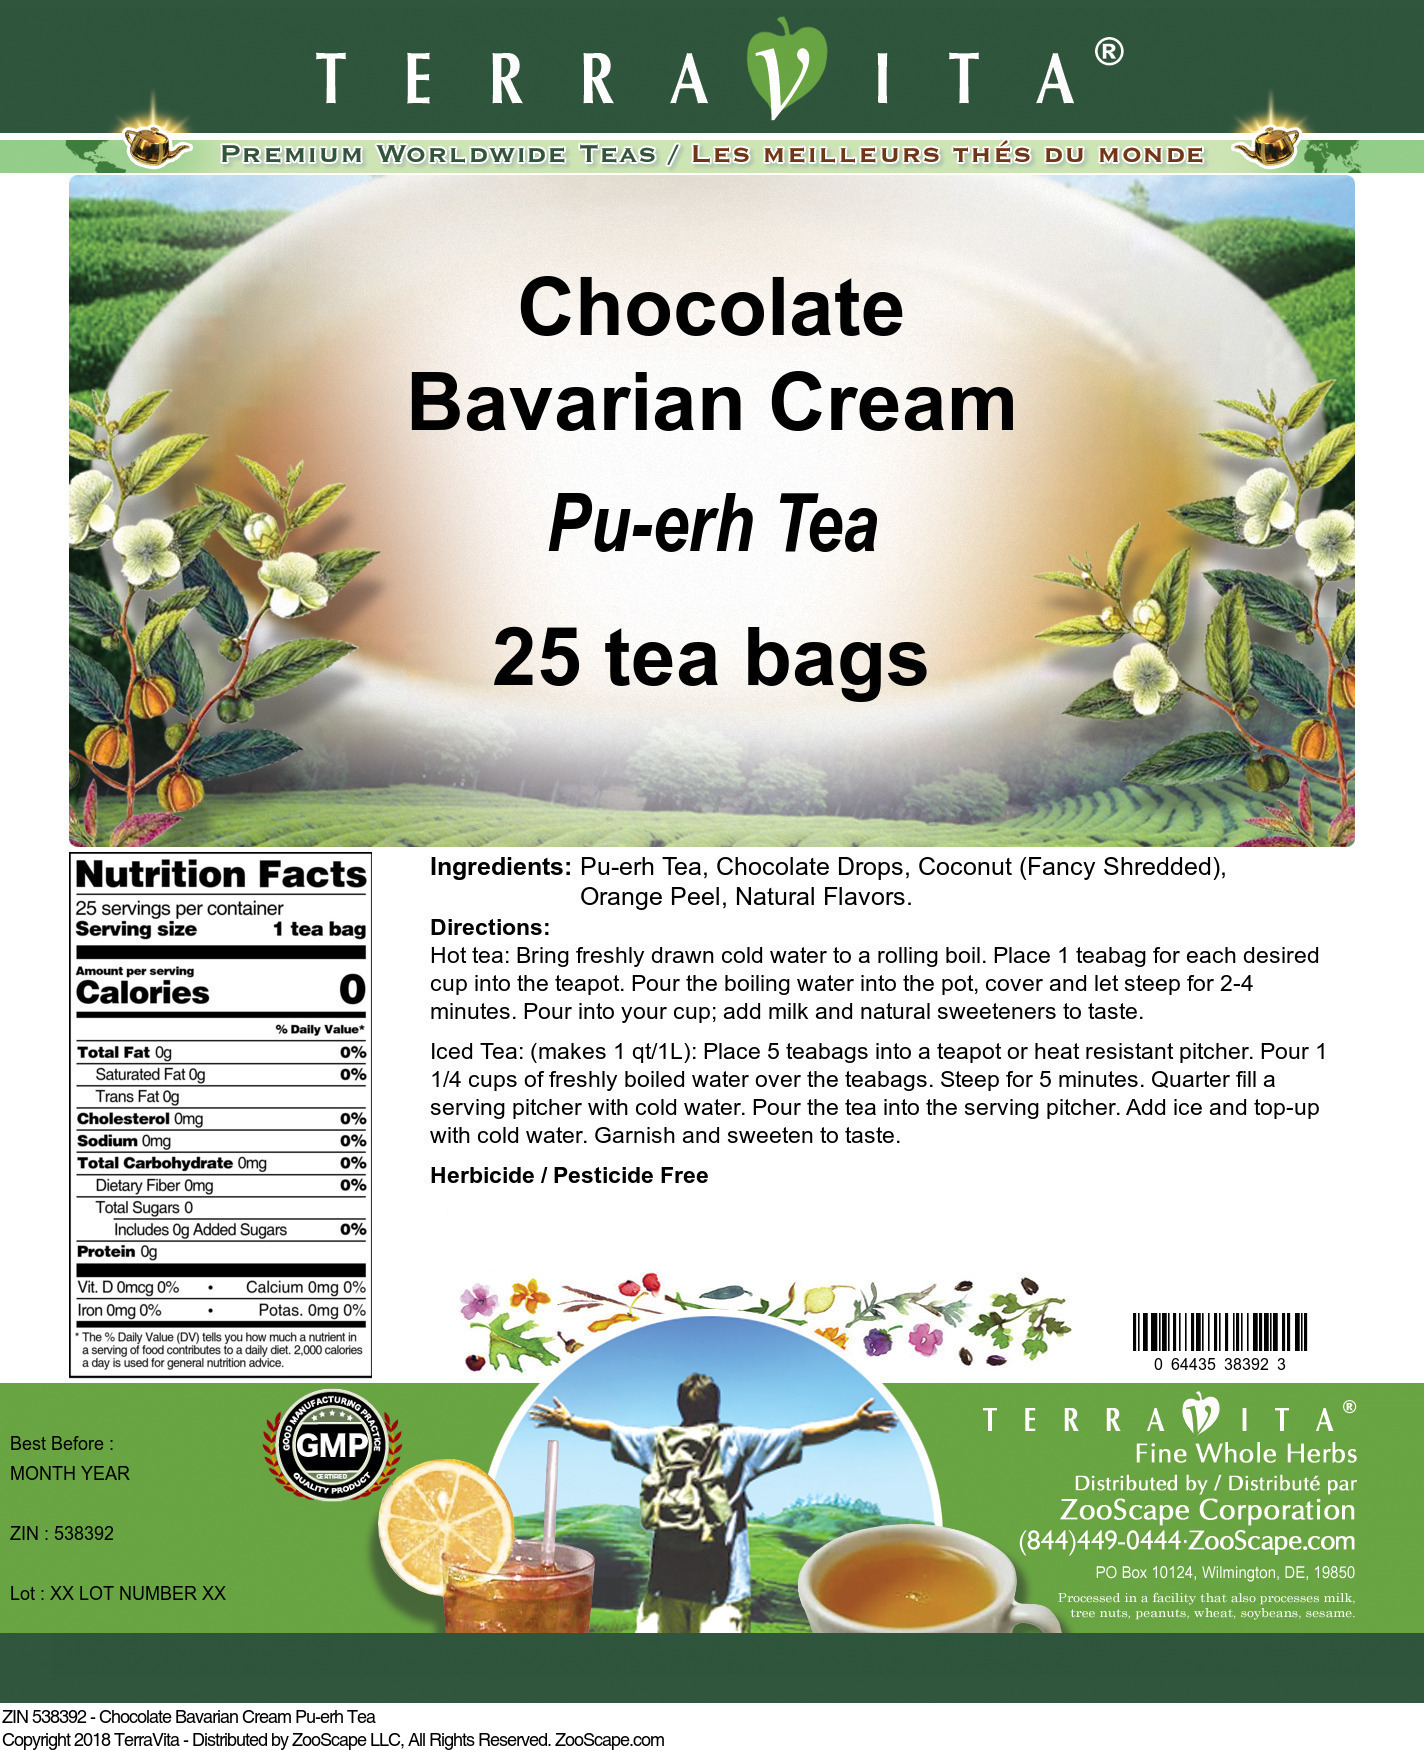 Chocolate Bavarian Cream Pu-erh Tea - Label